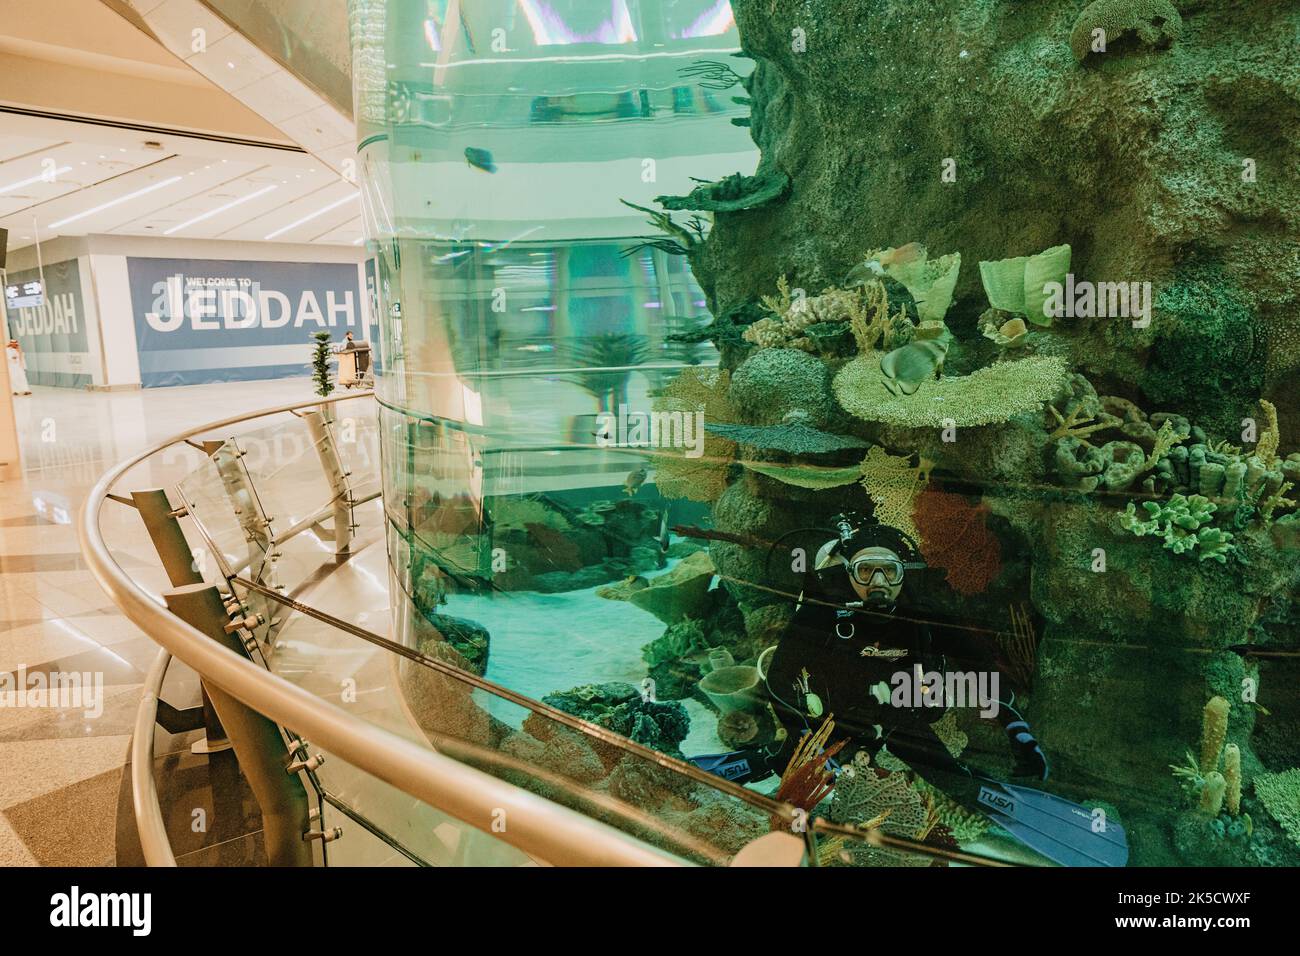 Saudi Arabia, Mecca Province, Jeddah/Jeddah, Airport, Aquarium Stock Photo